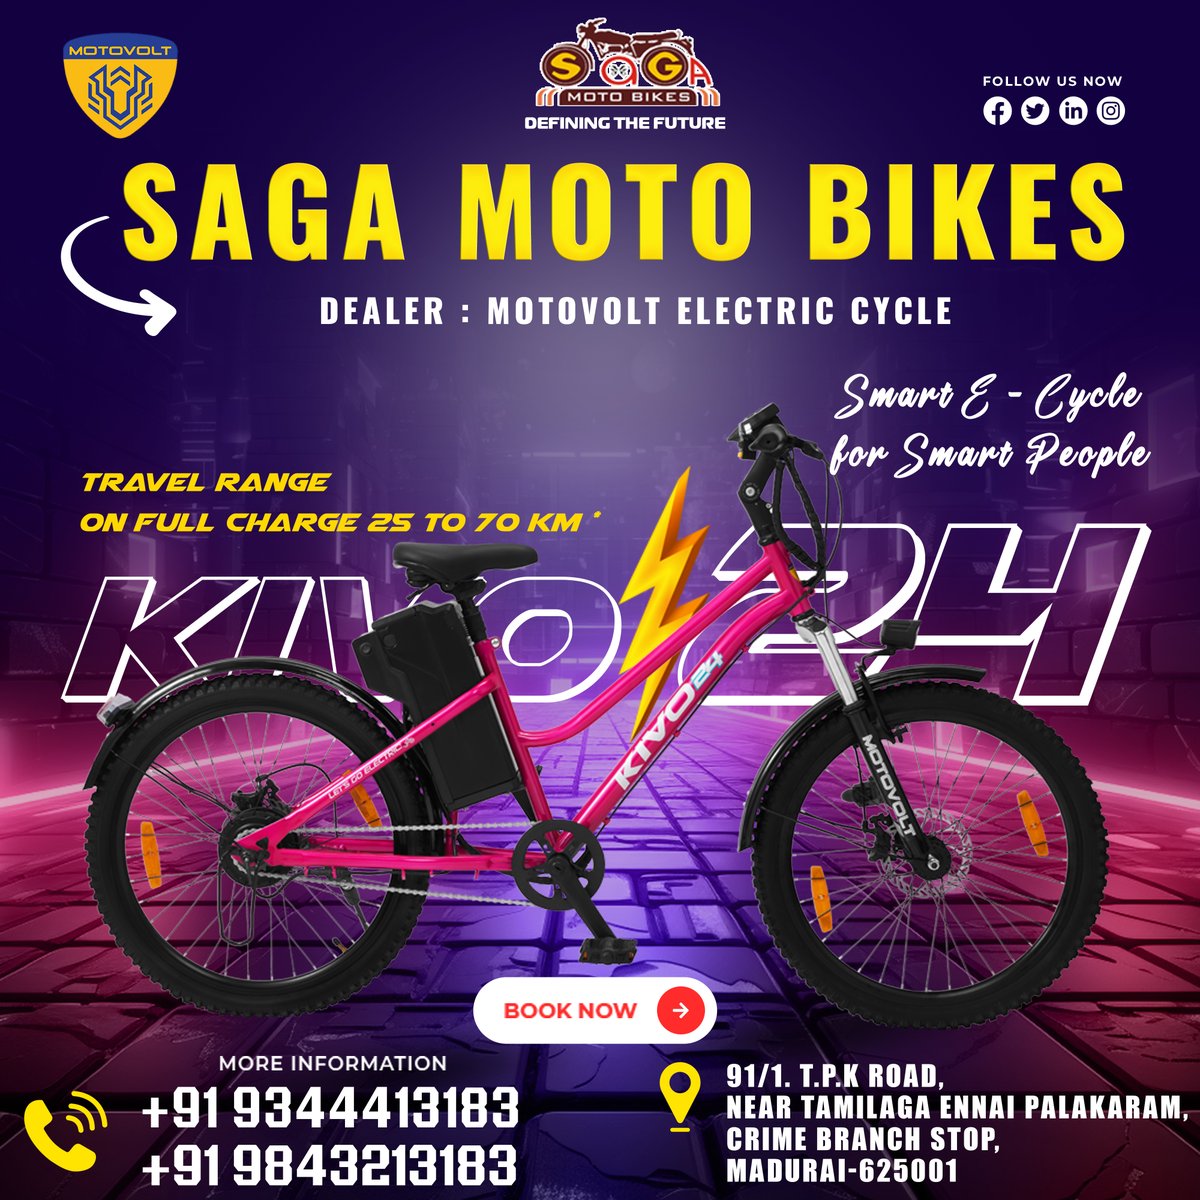 KIVO 24 - Saga Moto Bikes - Motovolt Electric Cycle - Madurai #serviceandwarranty #dealer #pedalassistmode #EnergyStorage #assistedbike #fastandflexing #improvefitness #ecofriendly #newtech #battery #urbn #safety #rideinfo #customersupport #performance #savings #trend #shop #hum